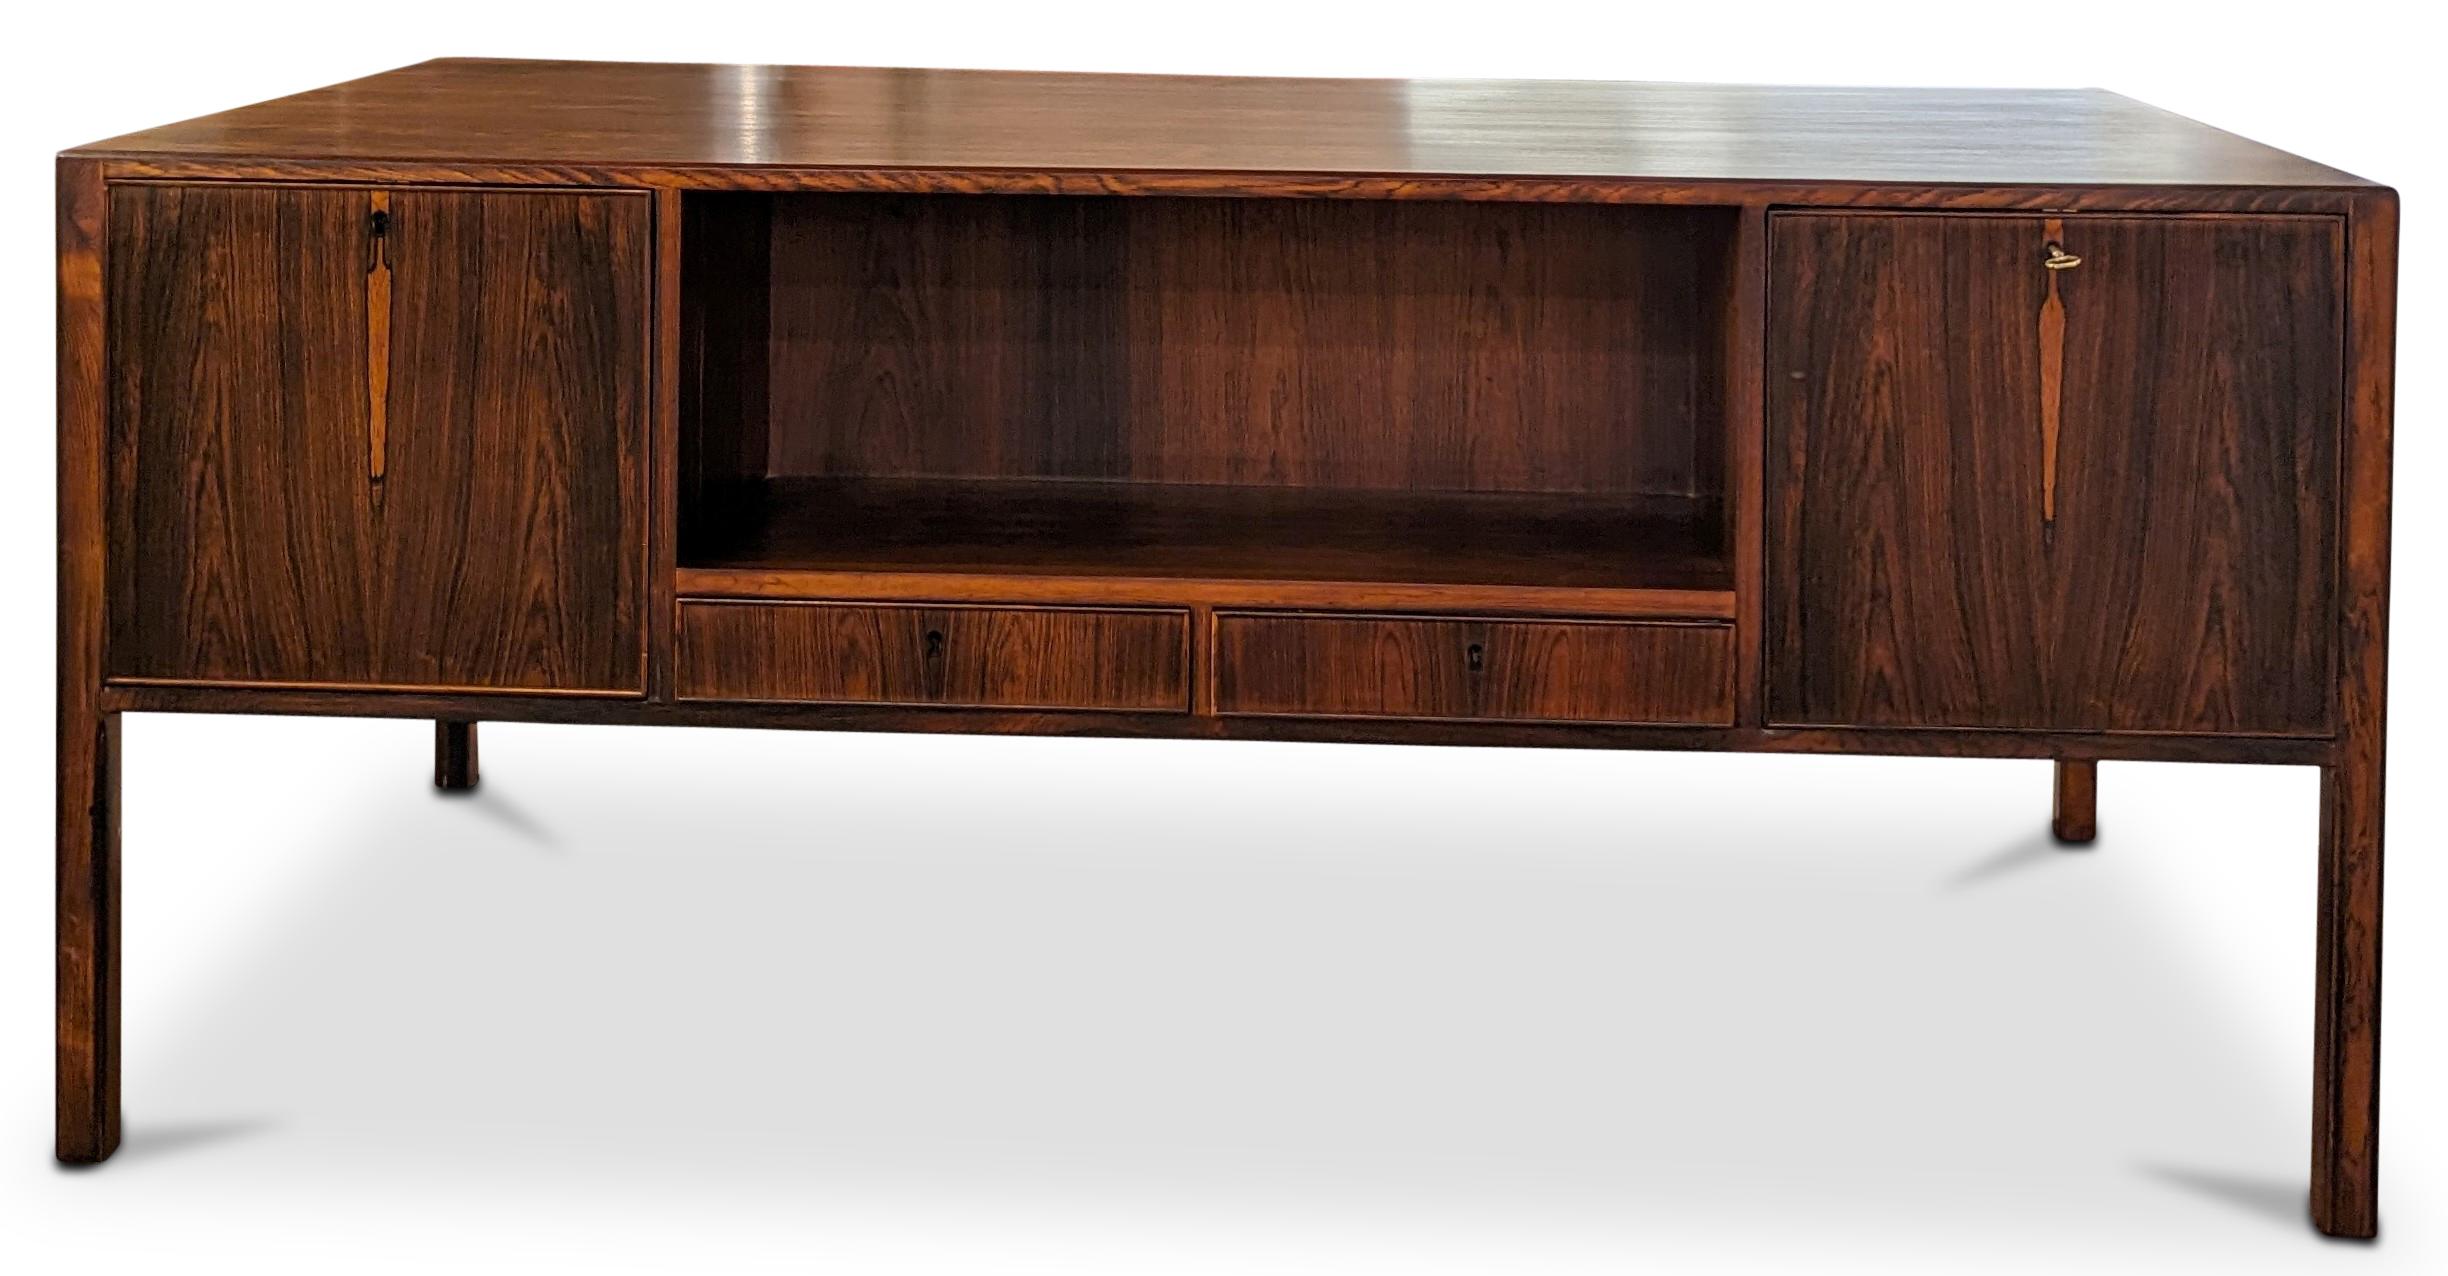 Ole Wancher Rosewood Desk - 0823177 Vintage Danish Mid Century For Sale 8